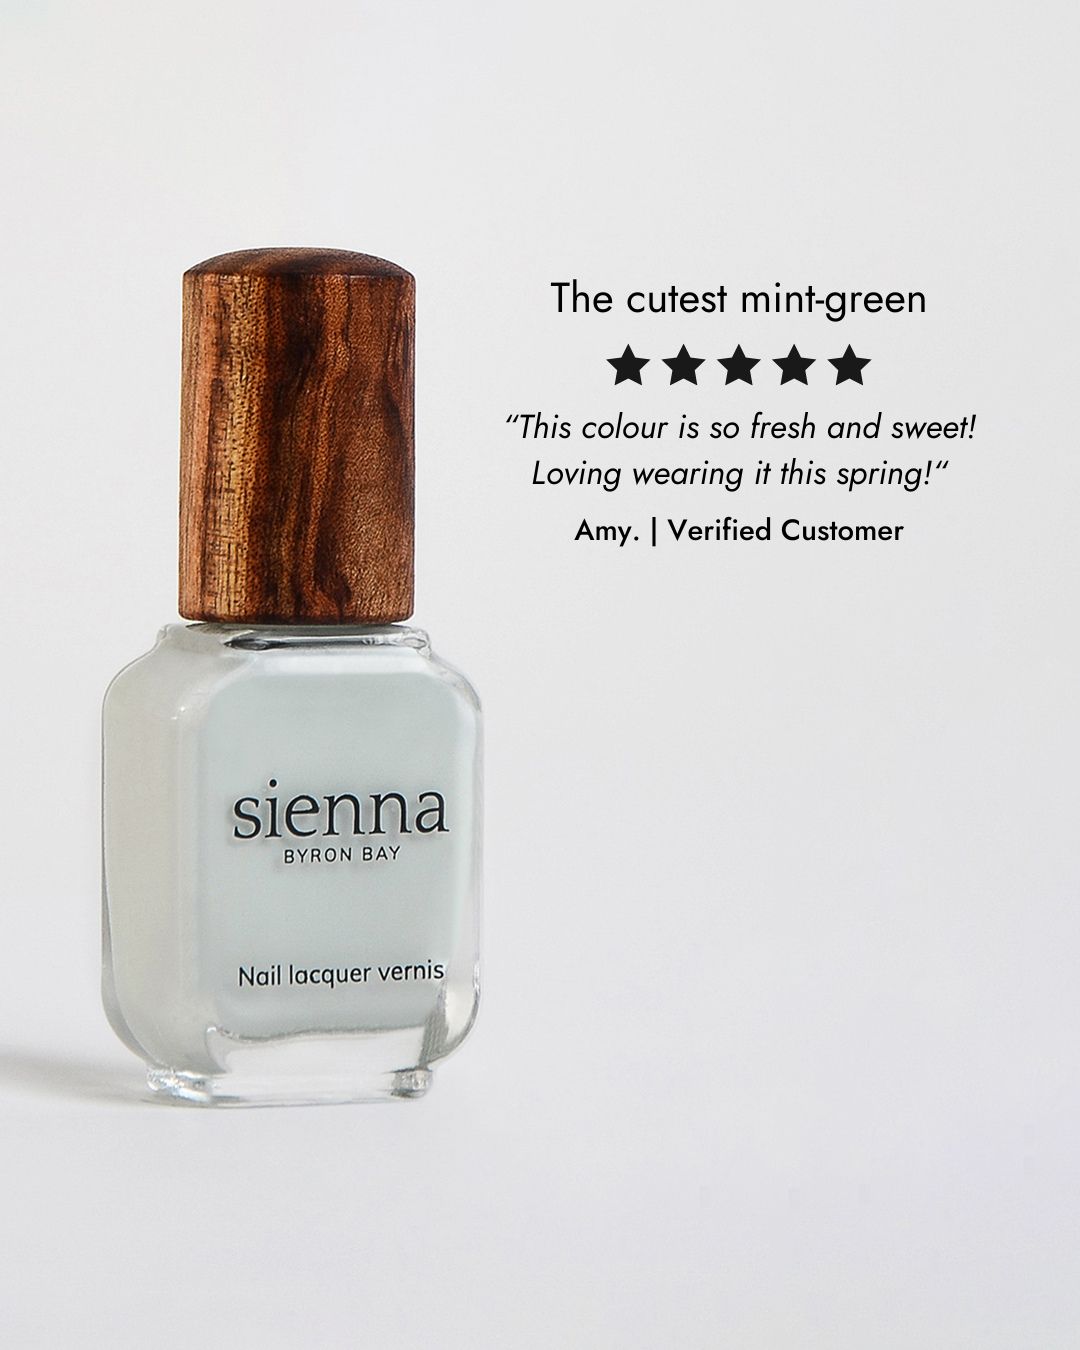 soft sage nail polish with 5 star review